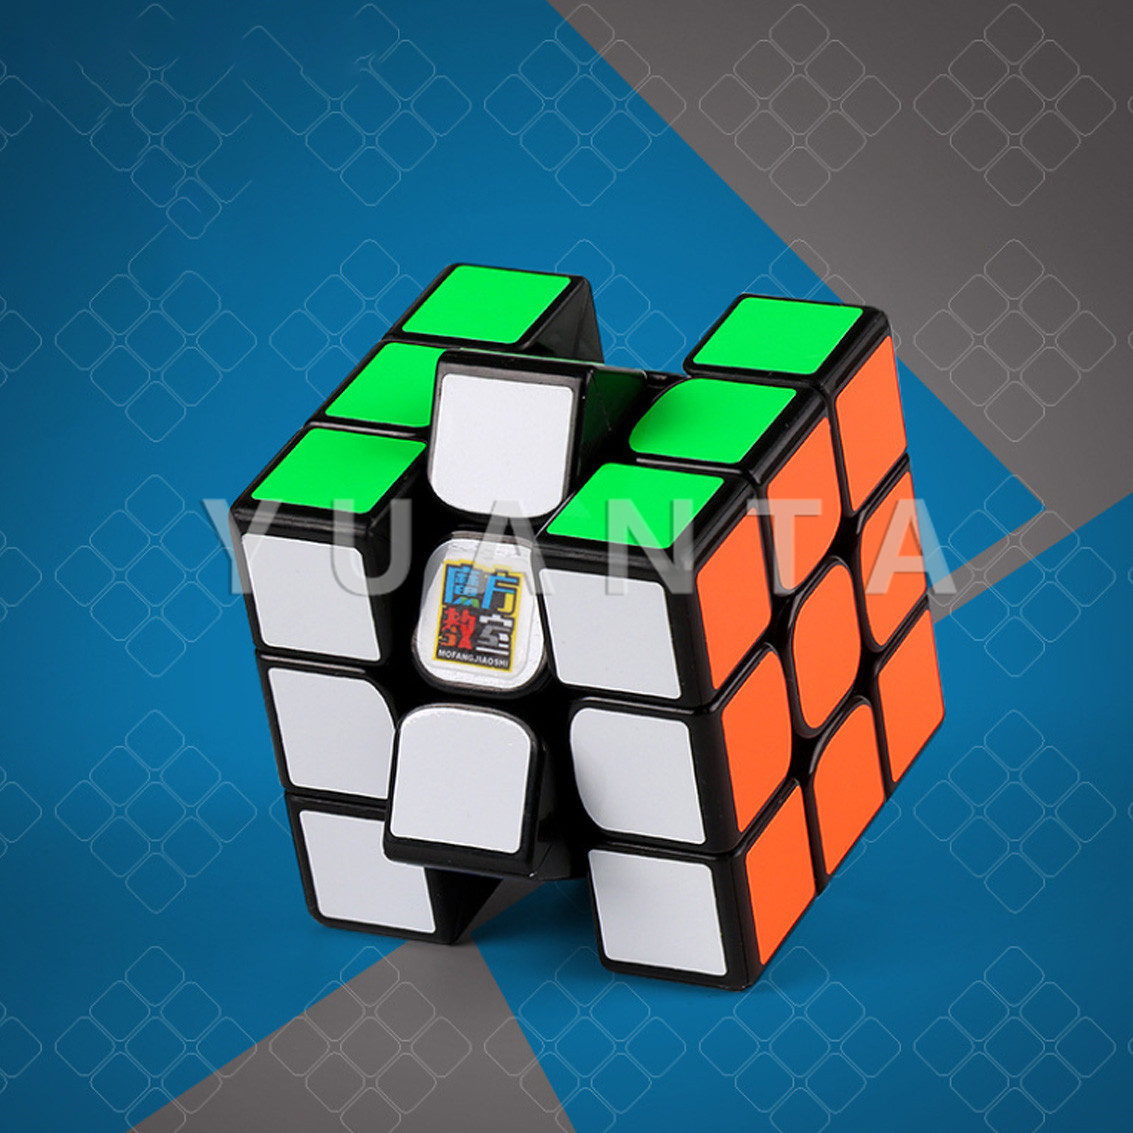 YUANTA ลูกบาศก์รูบิค 3 * 3 รูบิค ลูกบาศก์มายากลความเร็วระดับมืออาชีพ Twist Puzzle สำหรับ สำหรับผู้เริ่มต้นและการแข่งขัน Twist Puzzle Rubik's Cube for beginner & compe